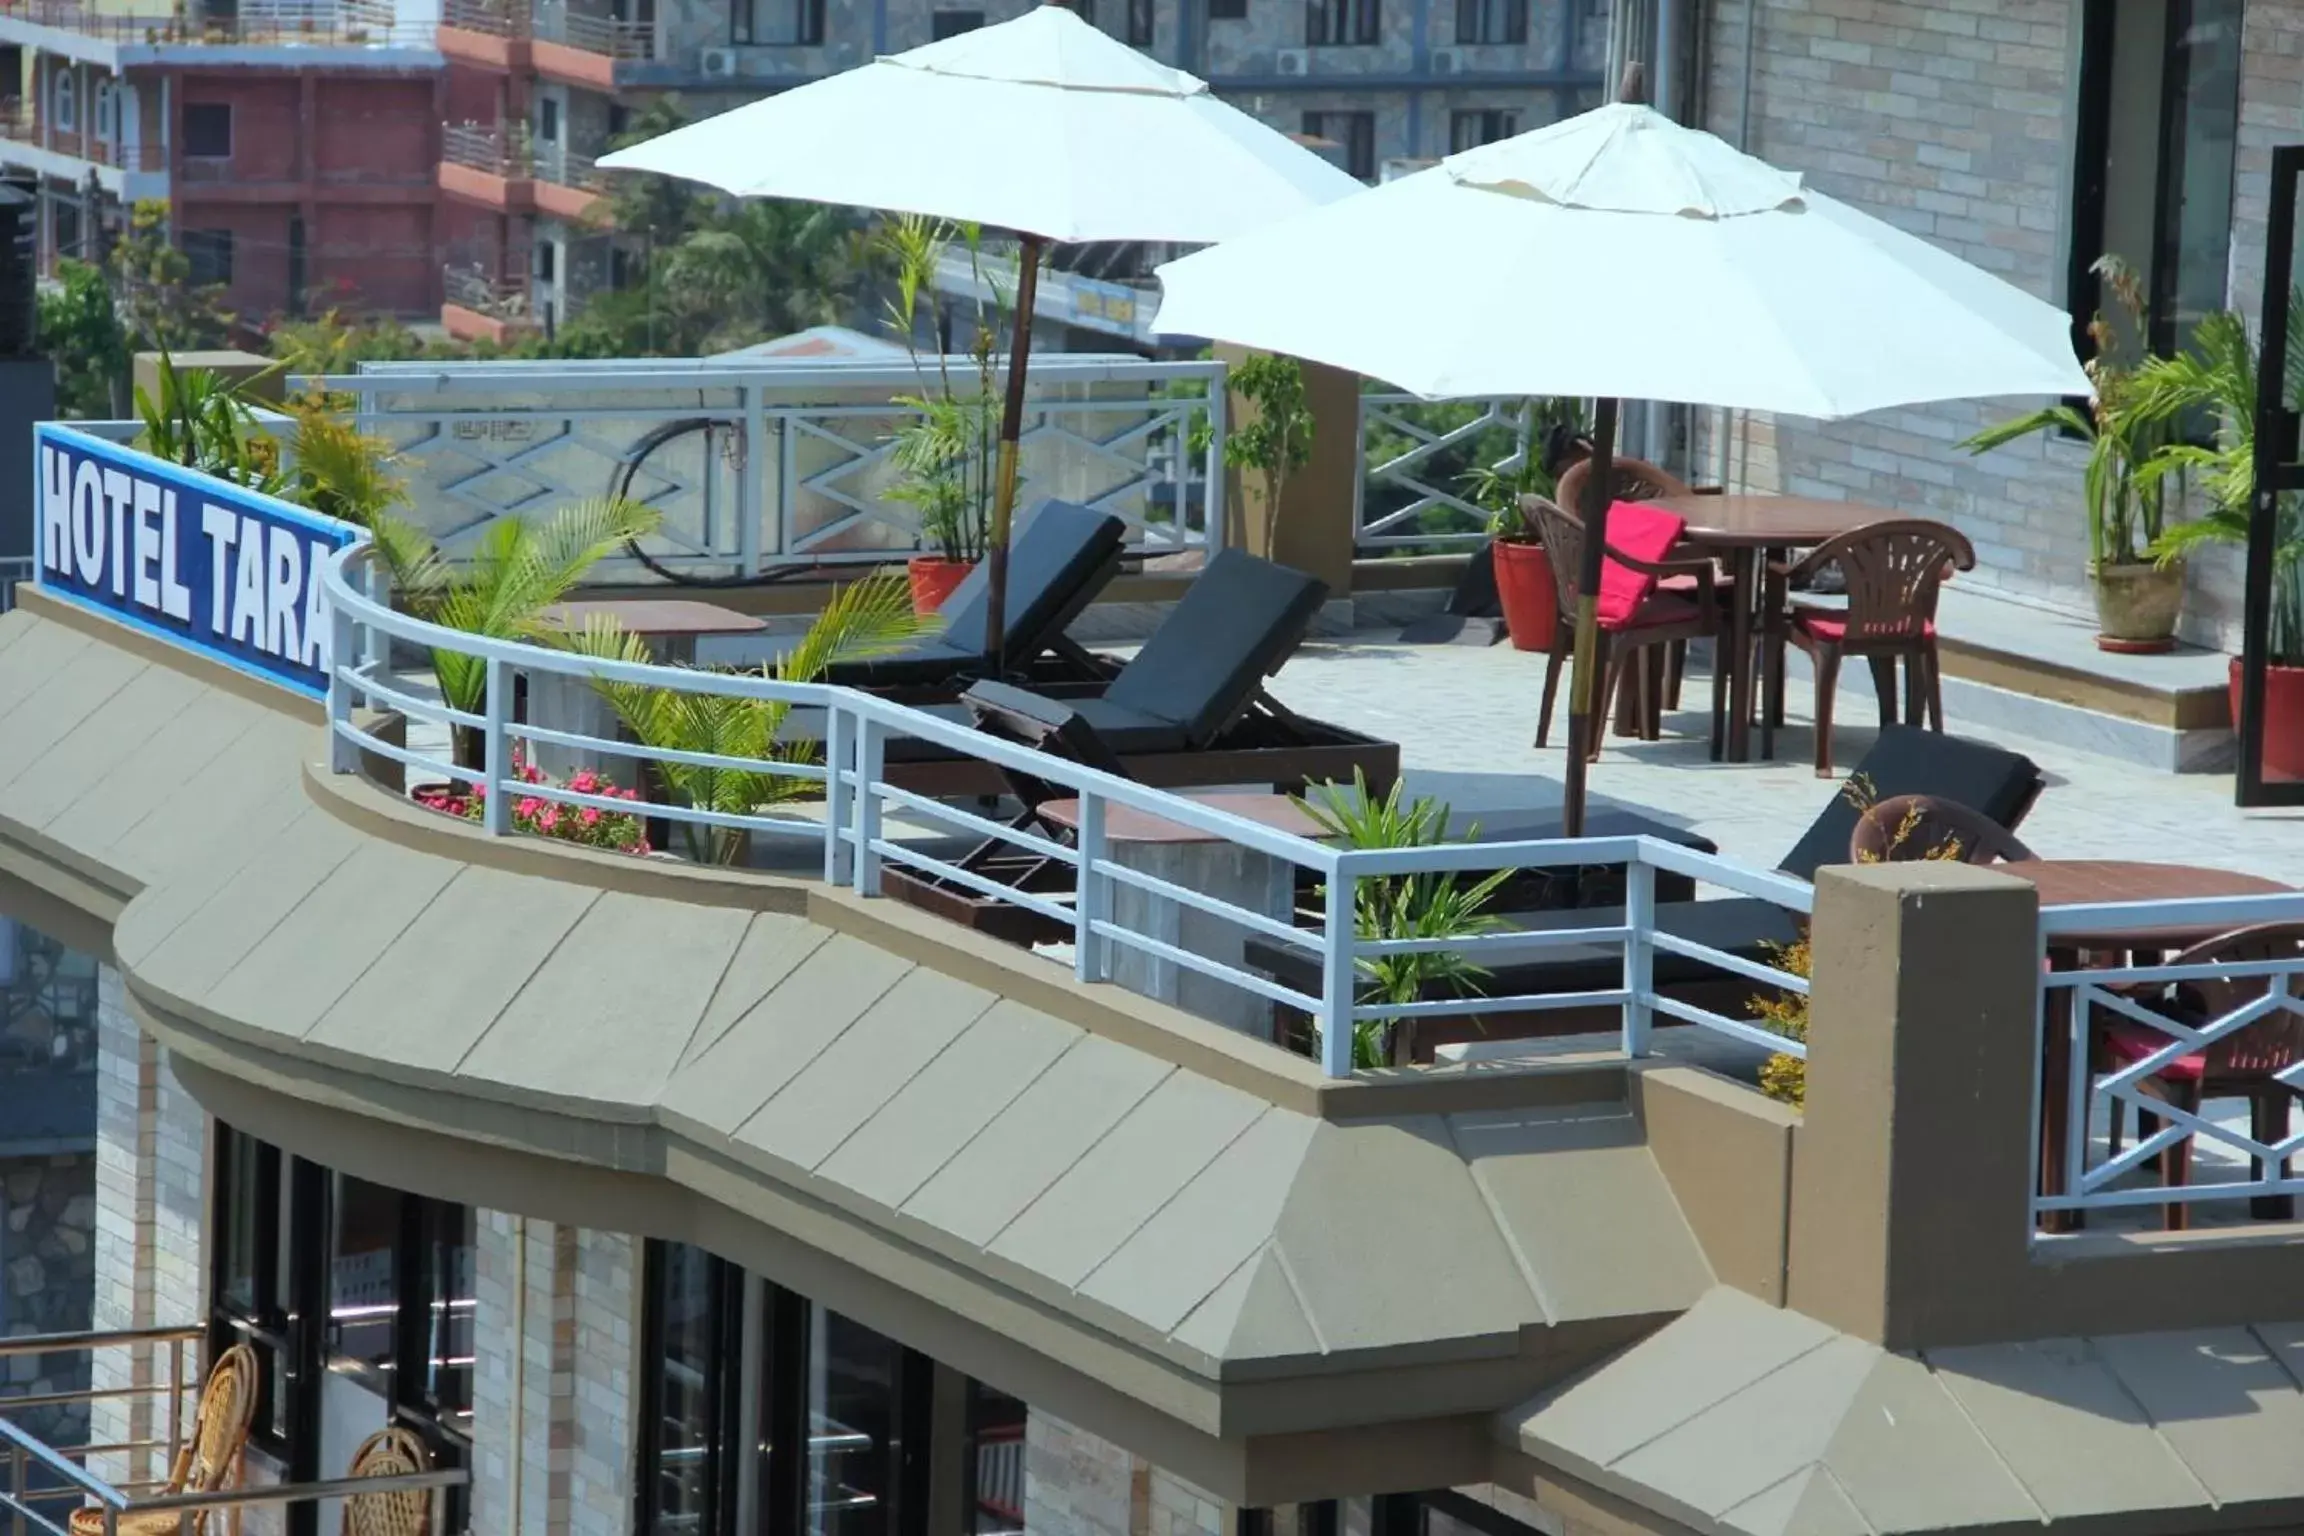 Balcony/Terrace, Patio/Outdoor Area in Hotel Tara